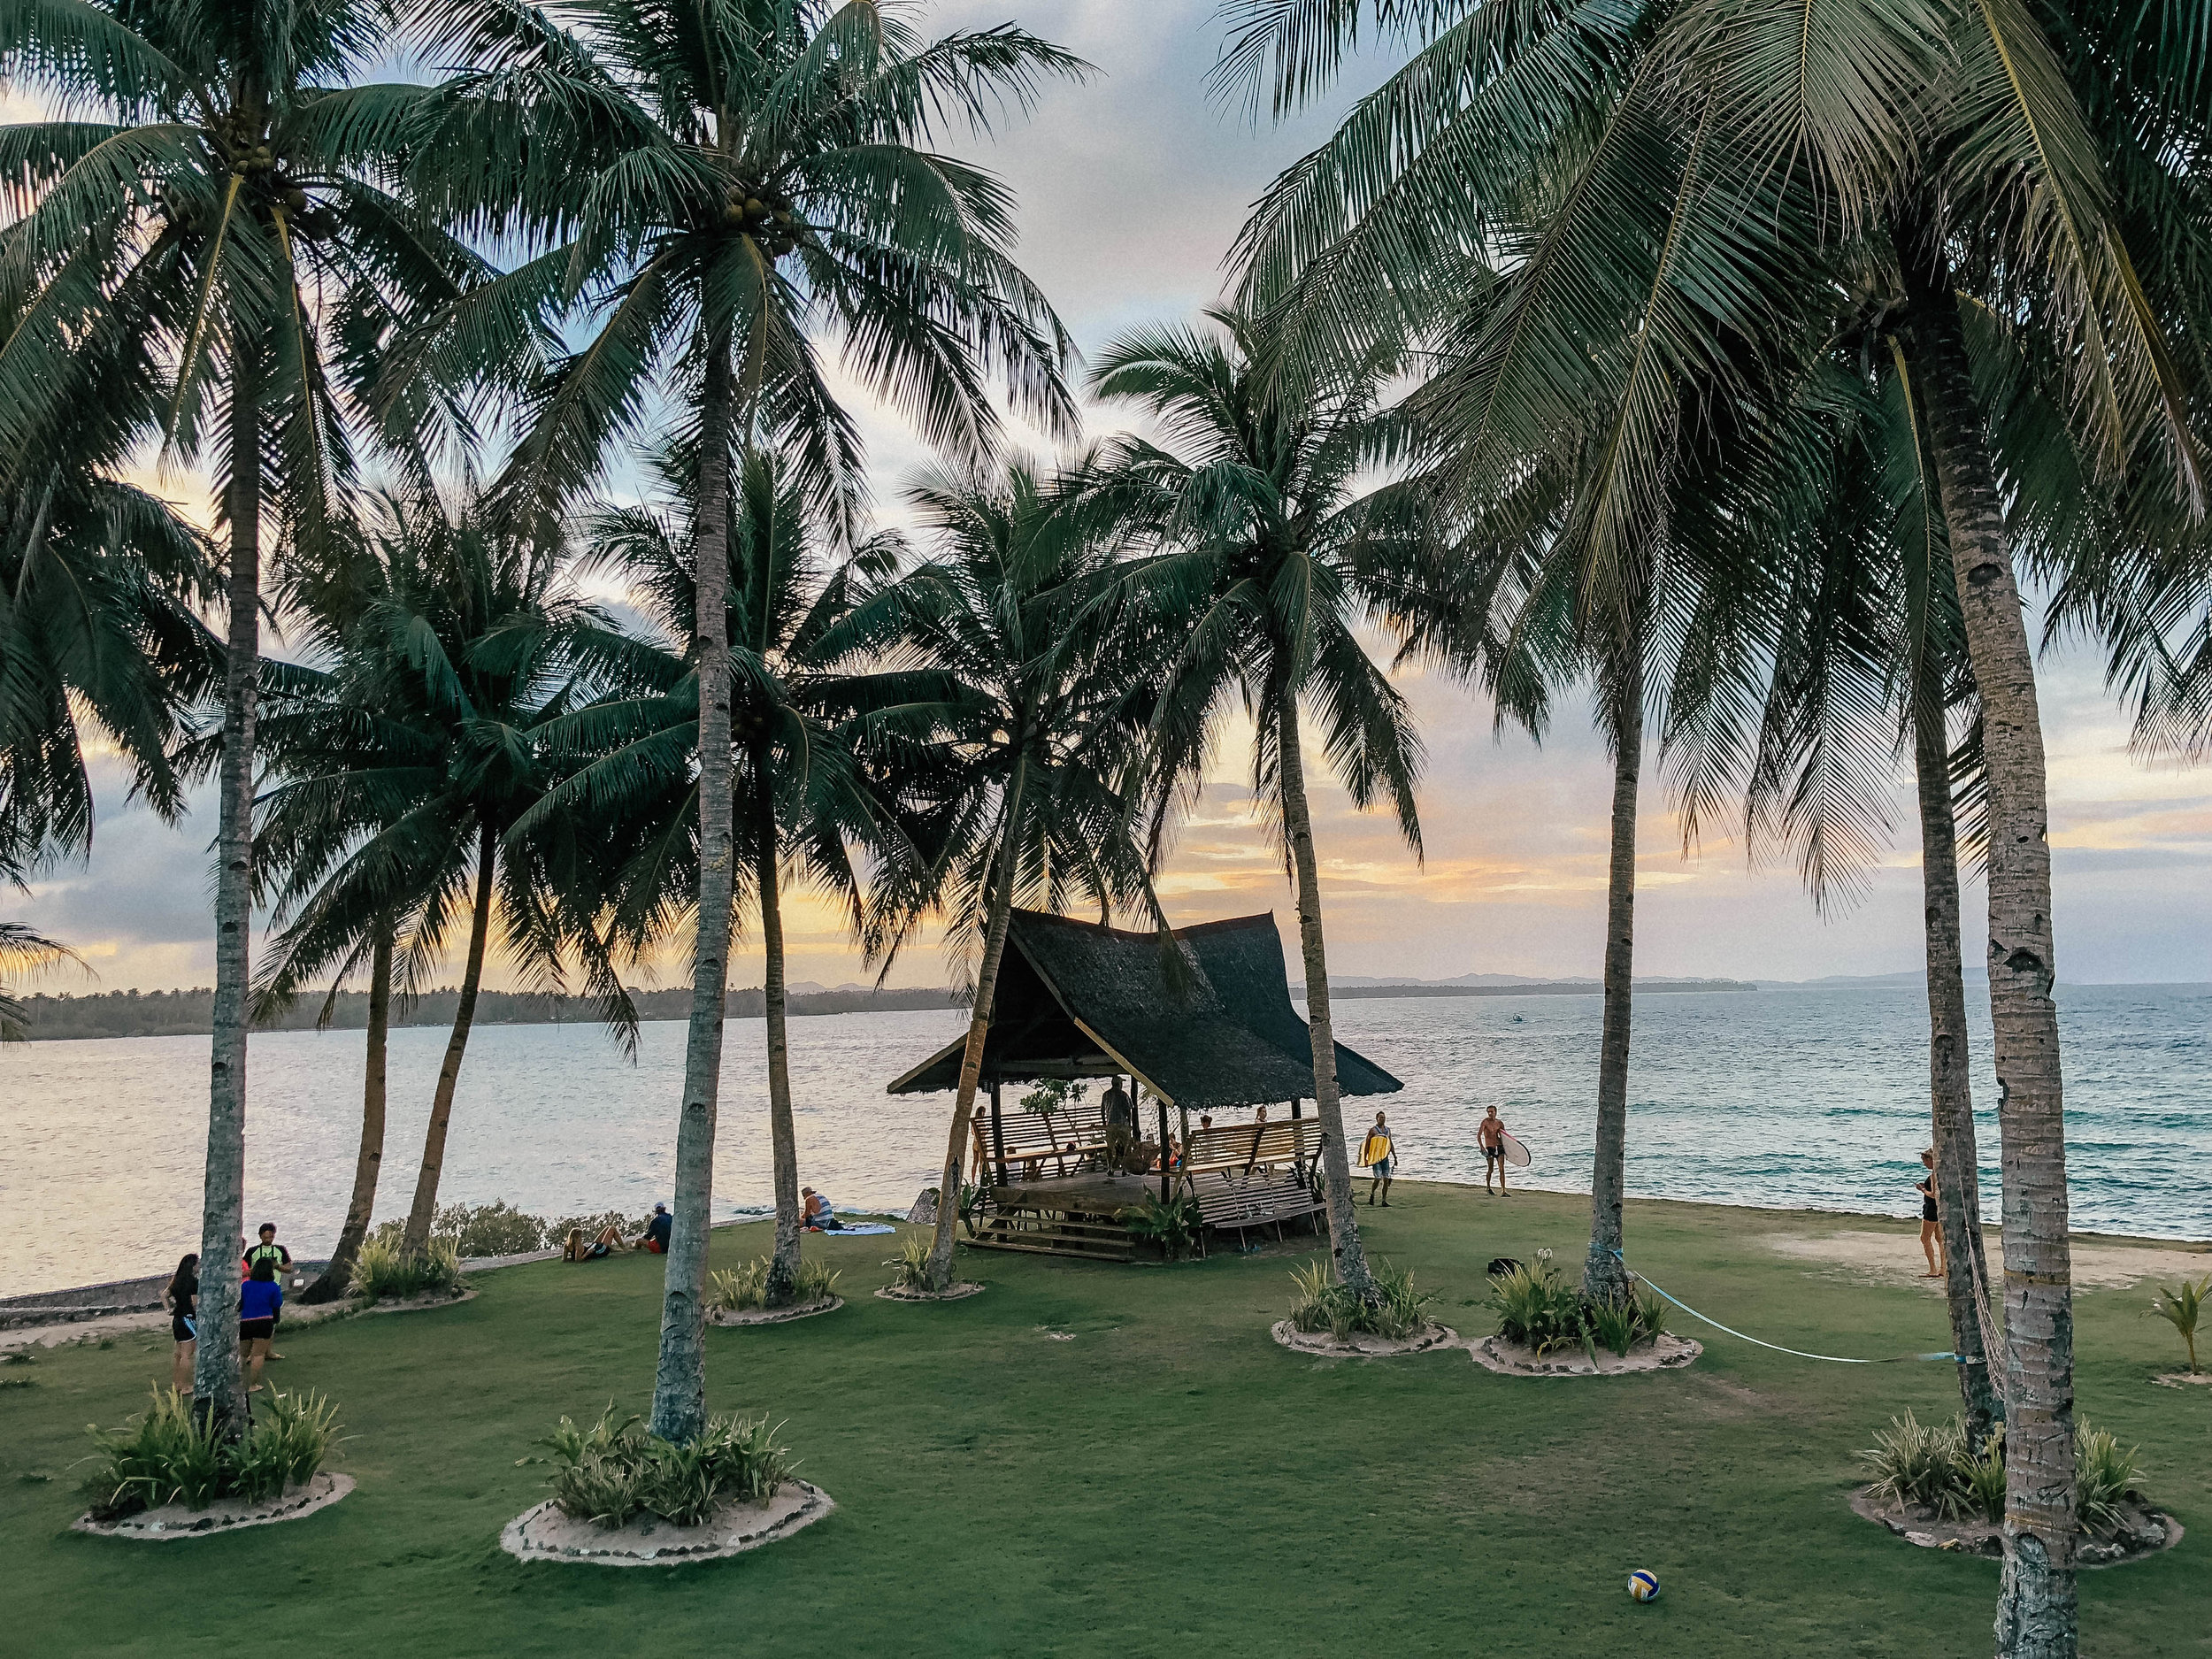 Sunset at Ocean 101 Hotel - Cloud 9 - Siargao Island - Philippines